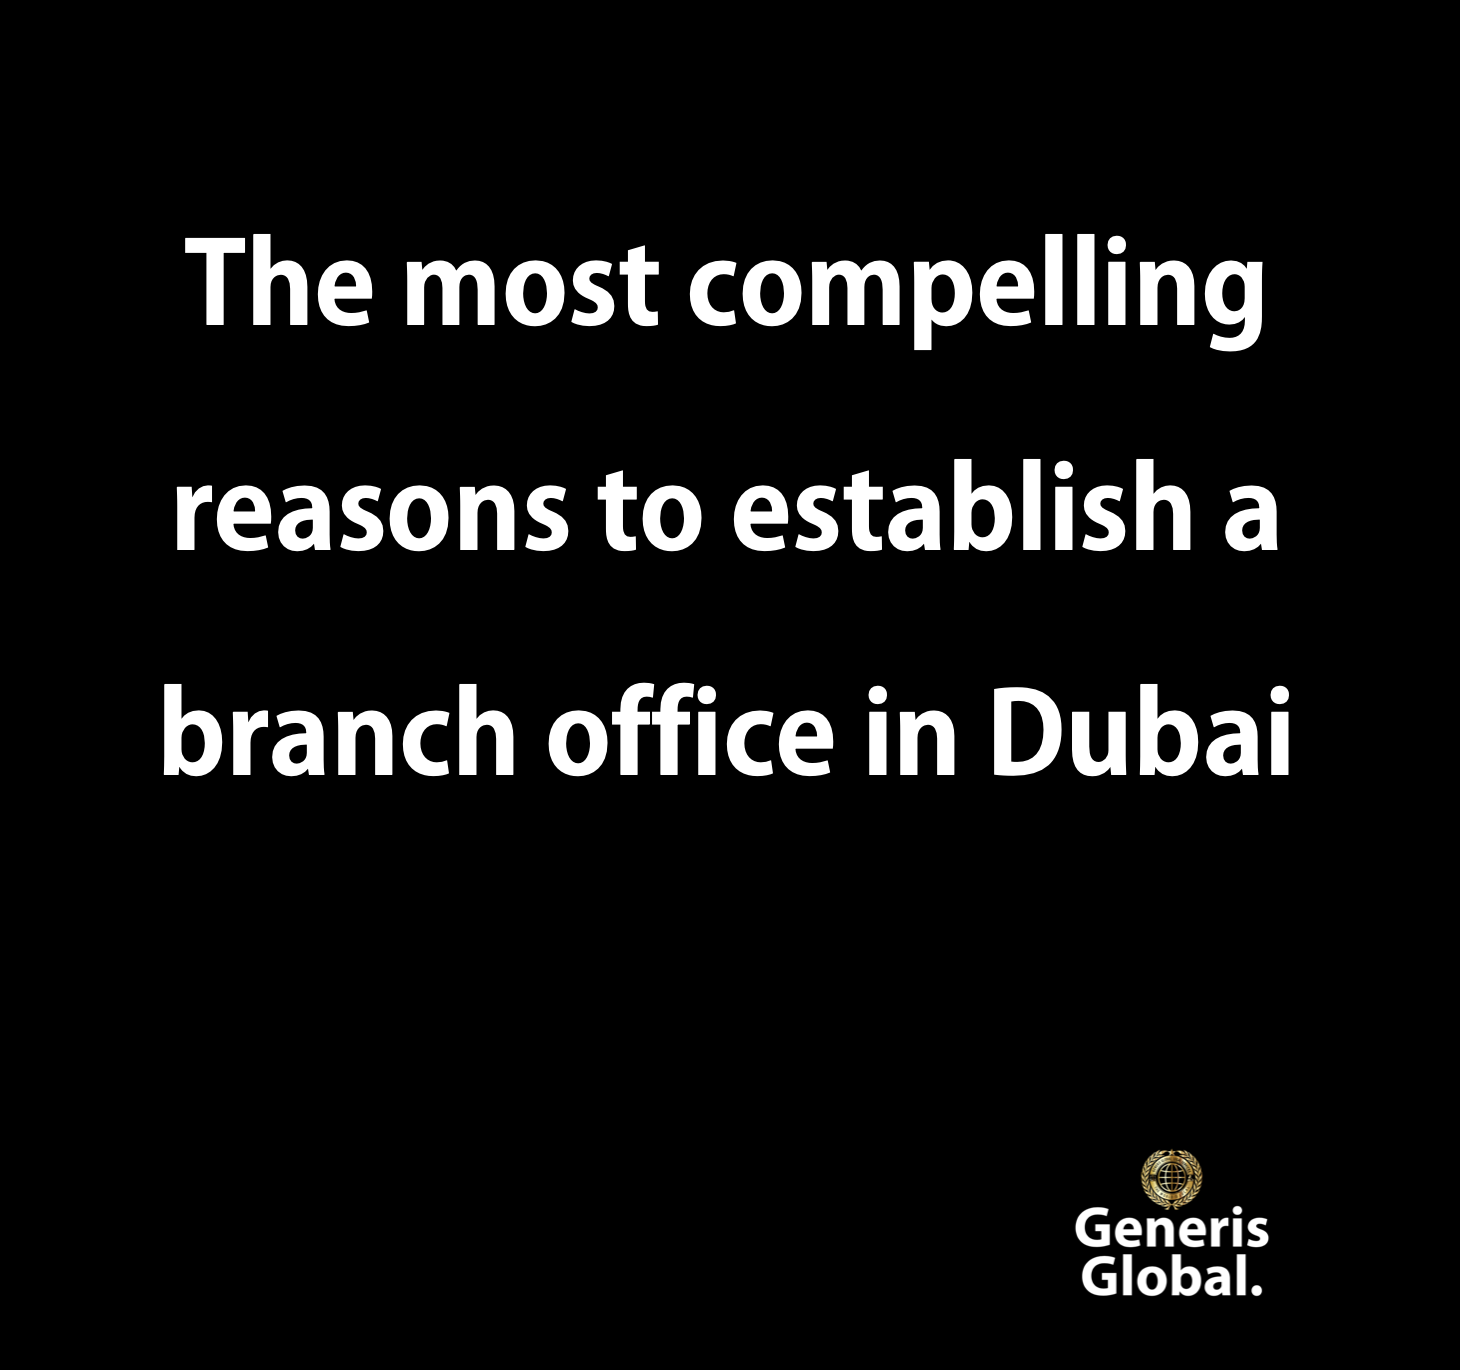 branch office in Dubai